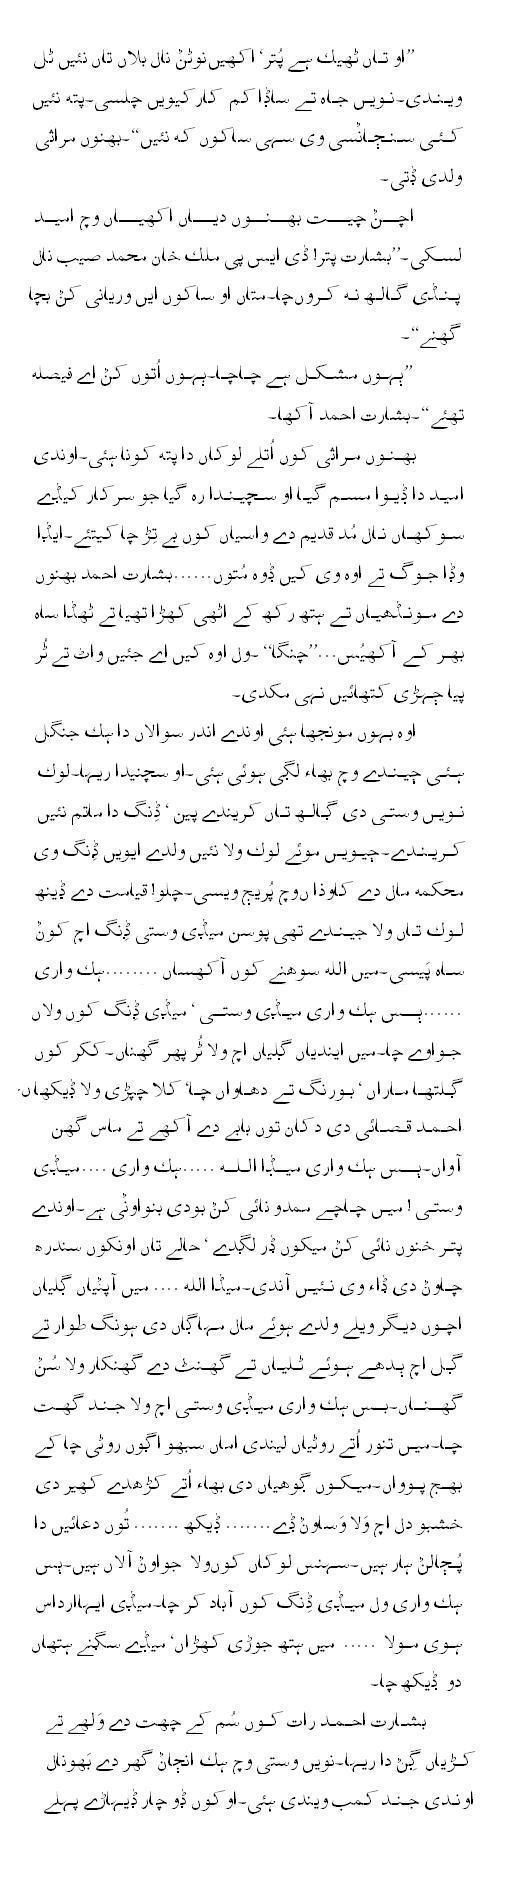 Dding (Hamid Siraj/ Translator Saeed Akhtar Zia) - Part 5